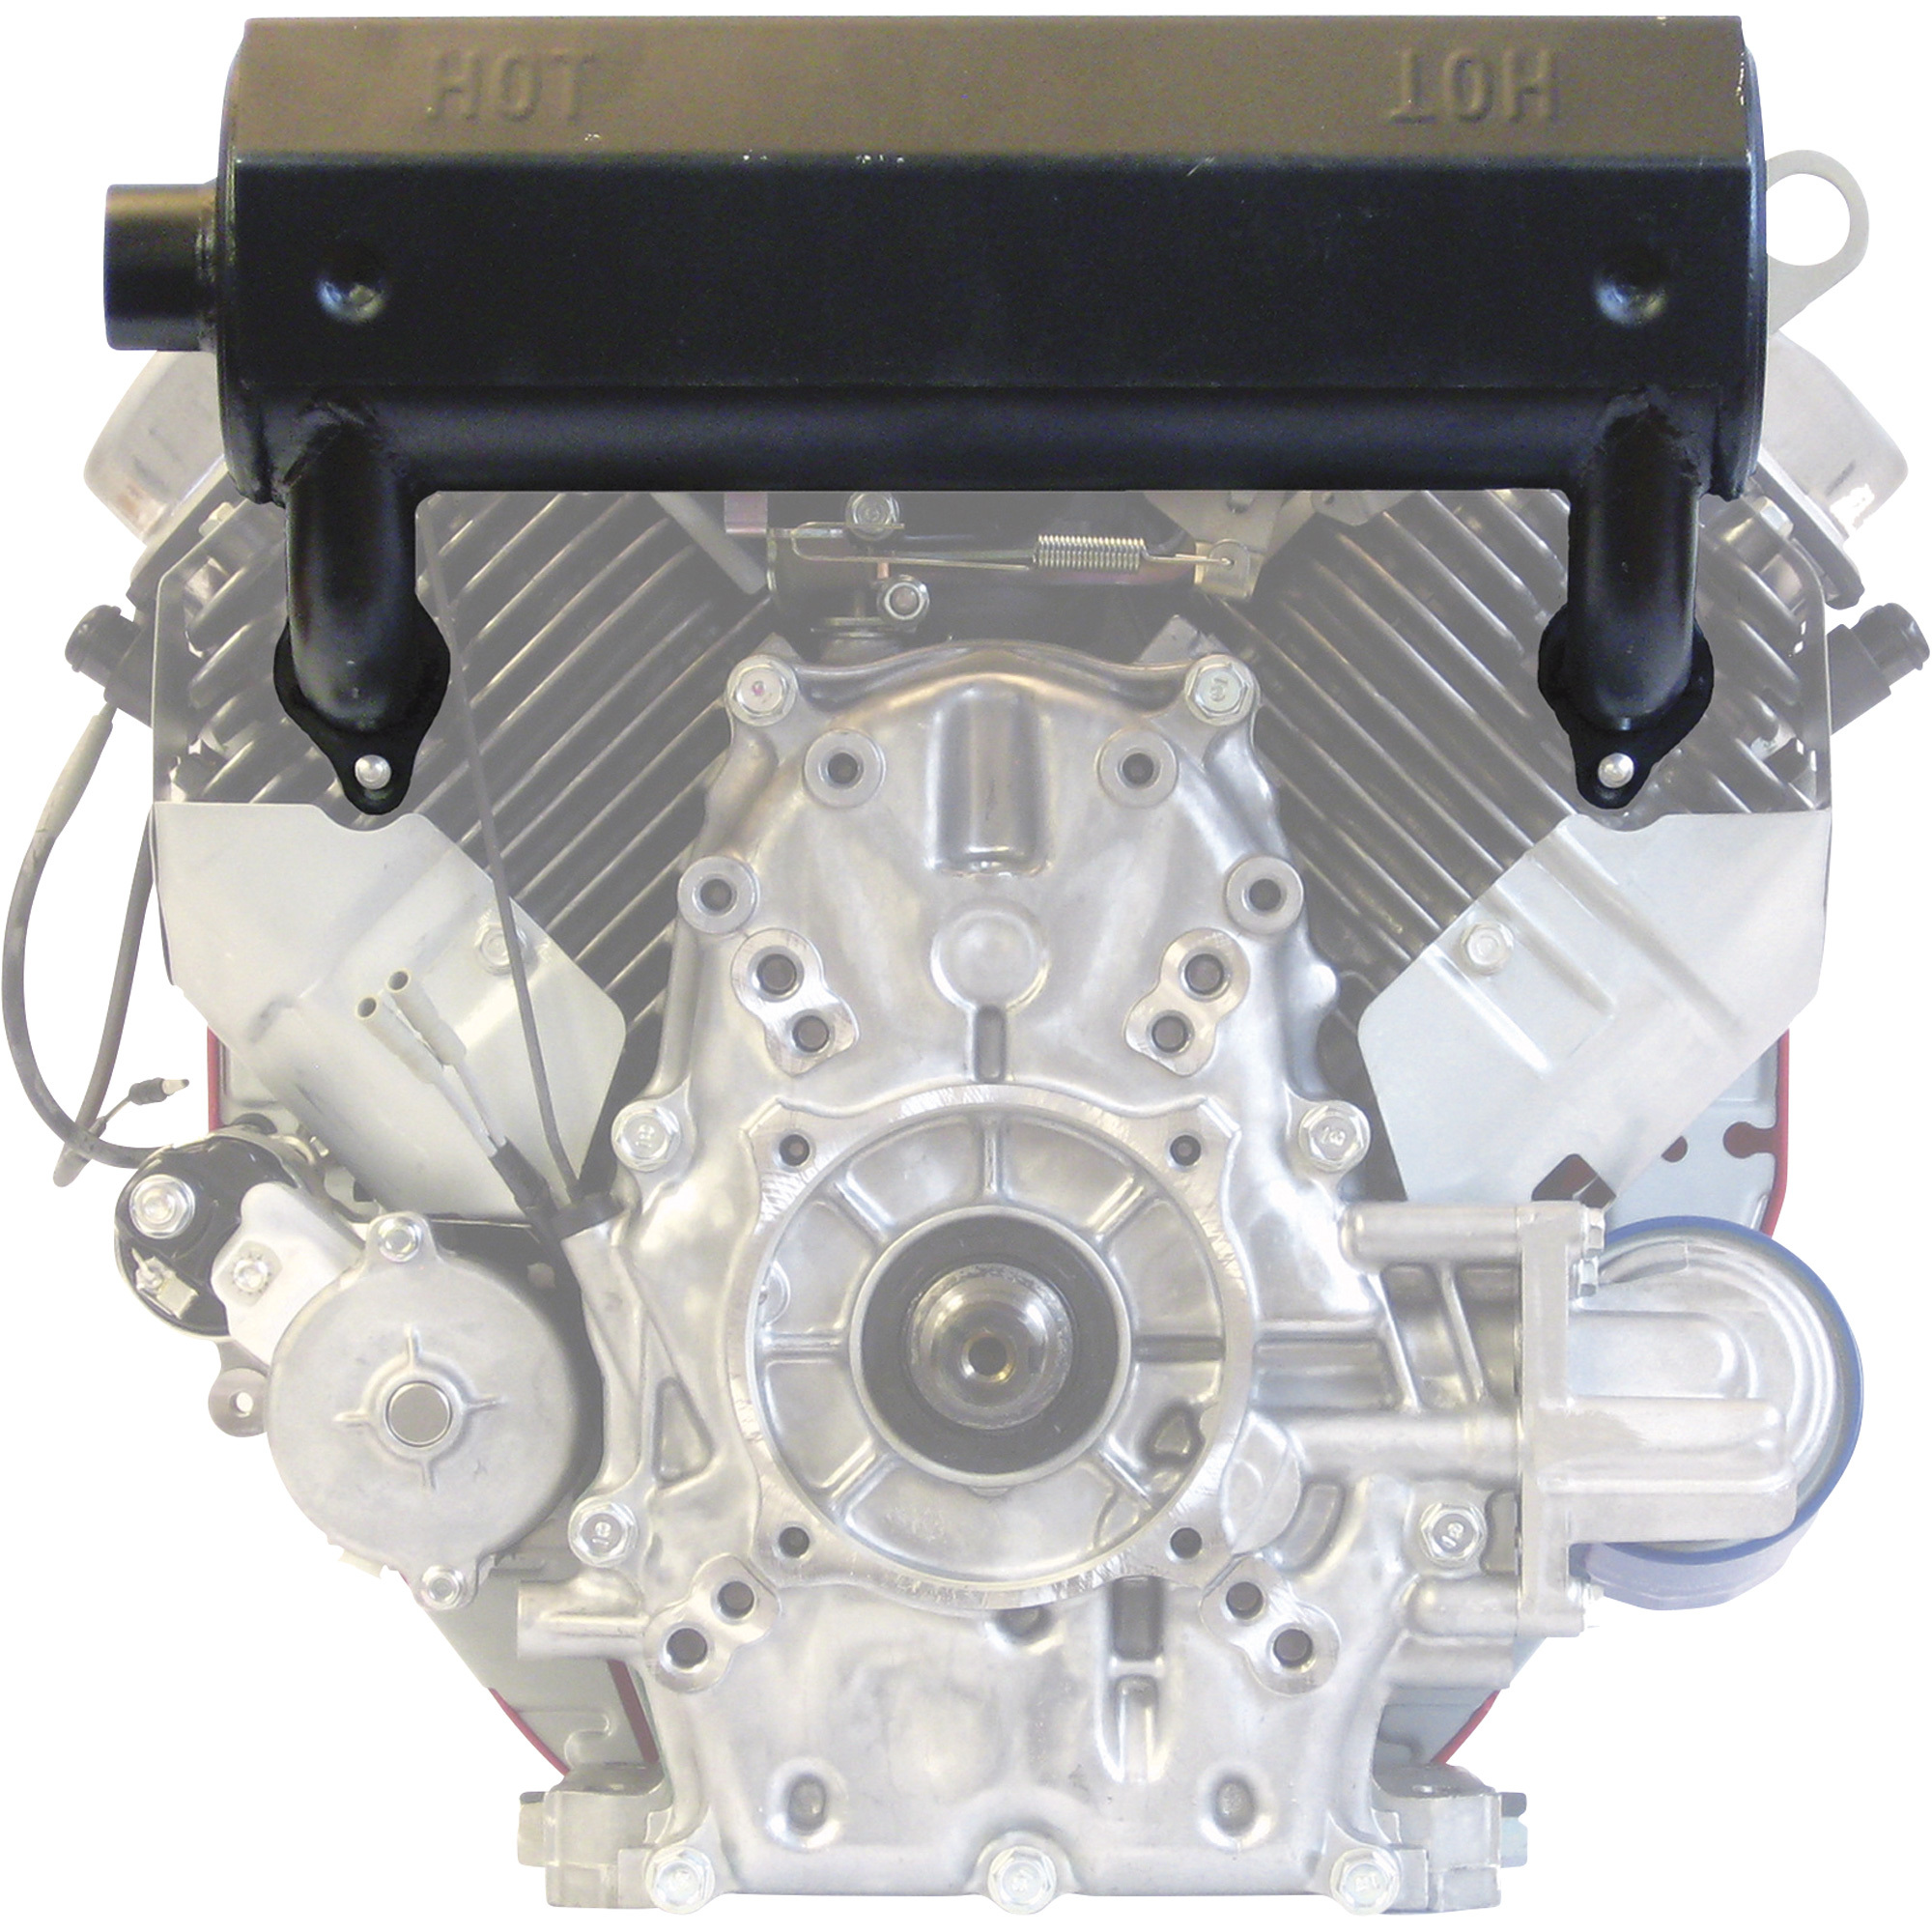 High-Mount Muffler for Honda V-Twin Engines â Fits GX610, 620 and 670 Engines, Left/Starter Side Mount, Model MUF-0424.SIL